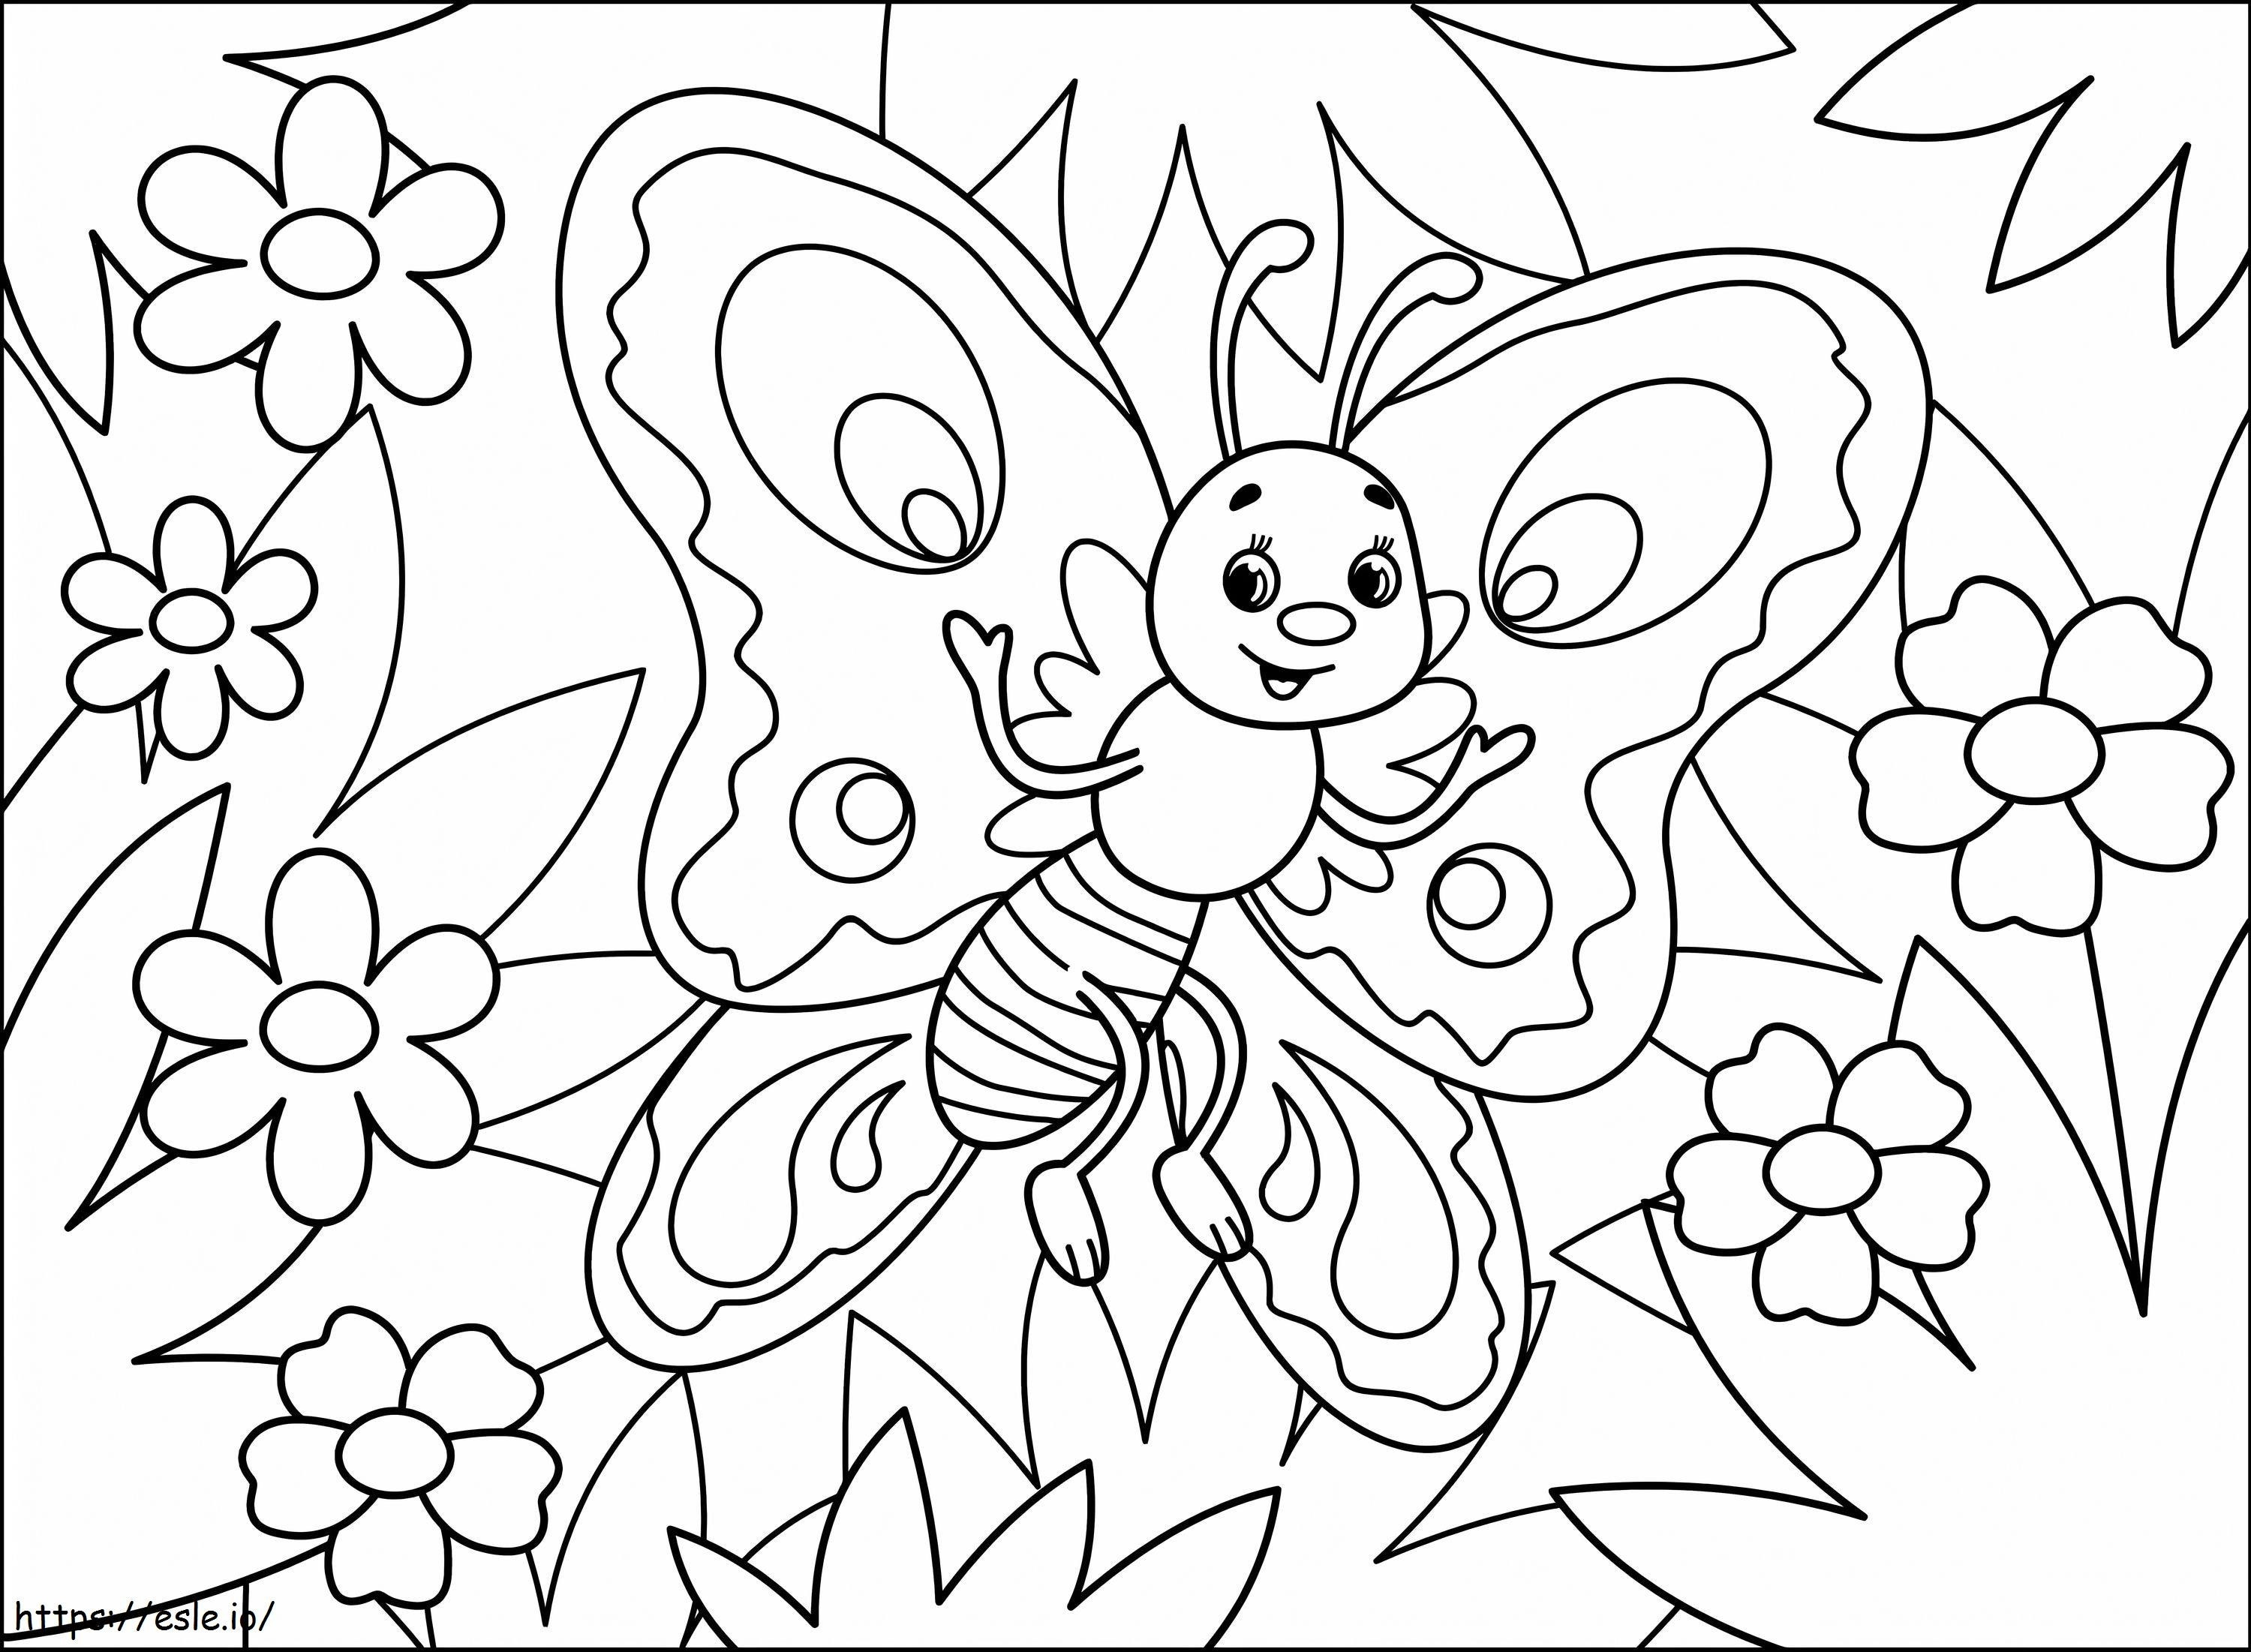 mariposa de dibujos animados para colorear